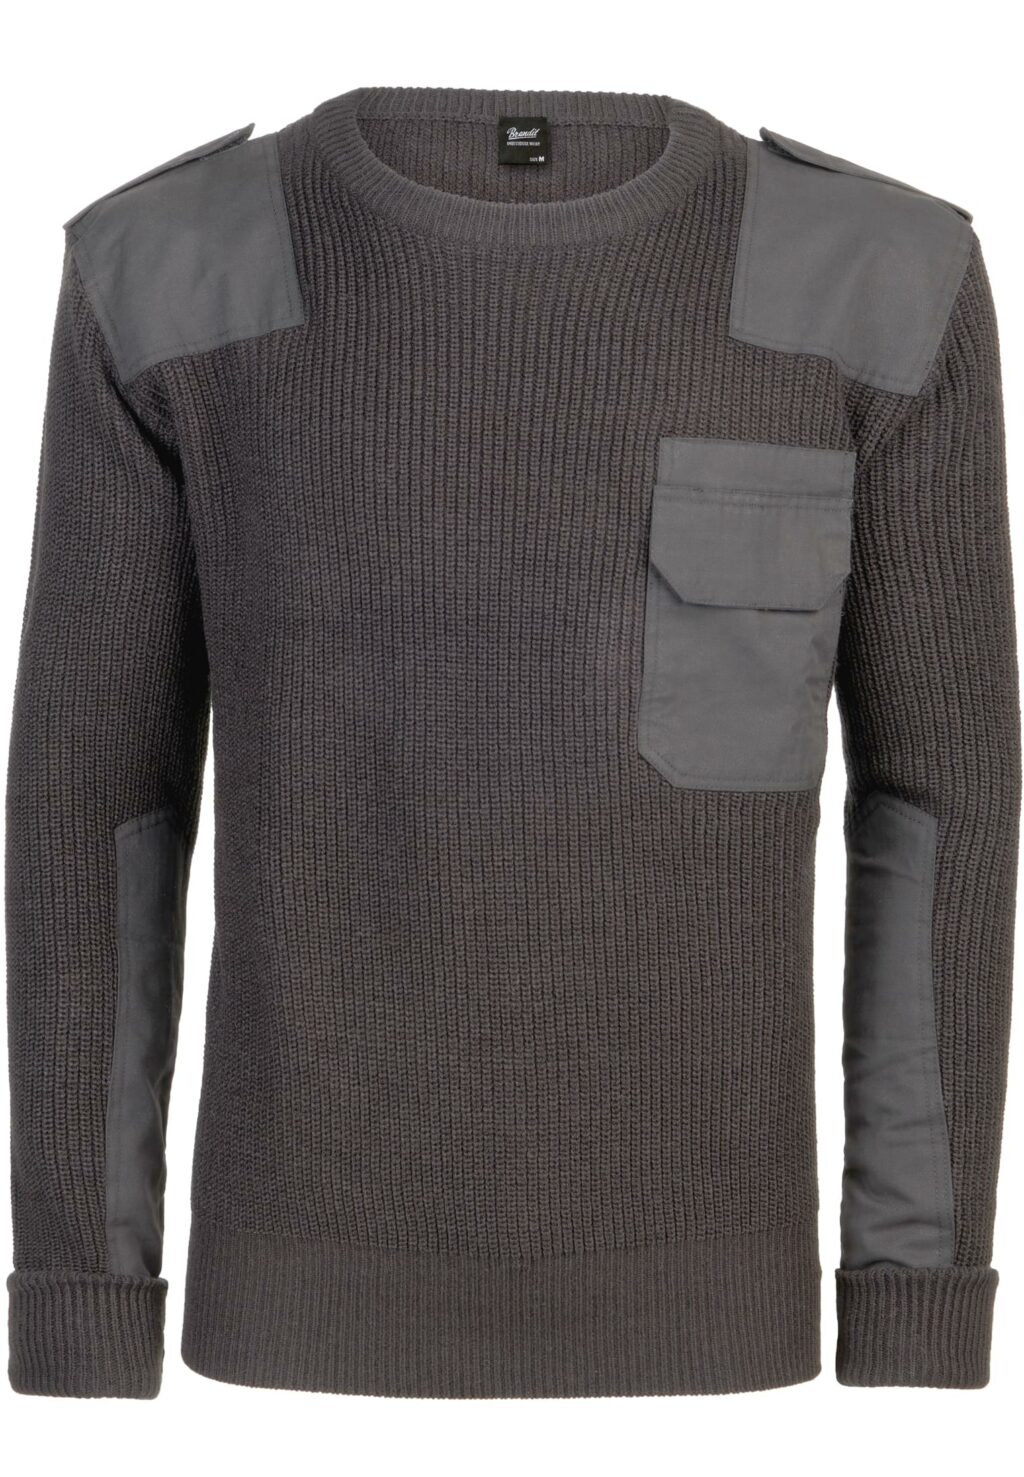 Brandit Military Sweater anthracite BD5018